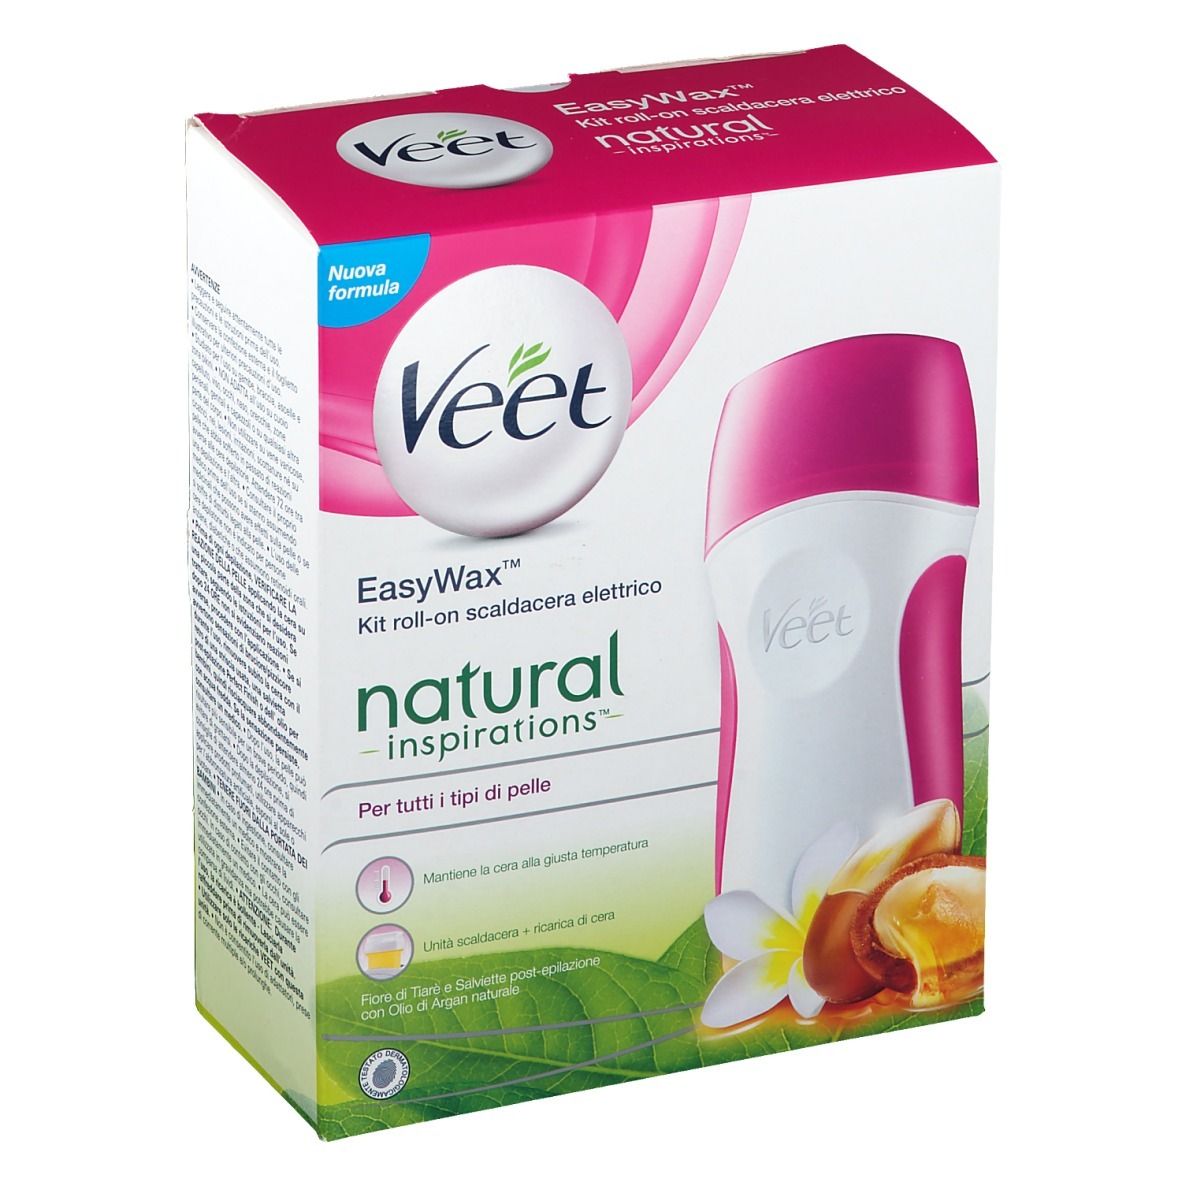 Image of Veet Easy Wax Kit Fiore Tiarè & Argan Oil